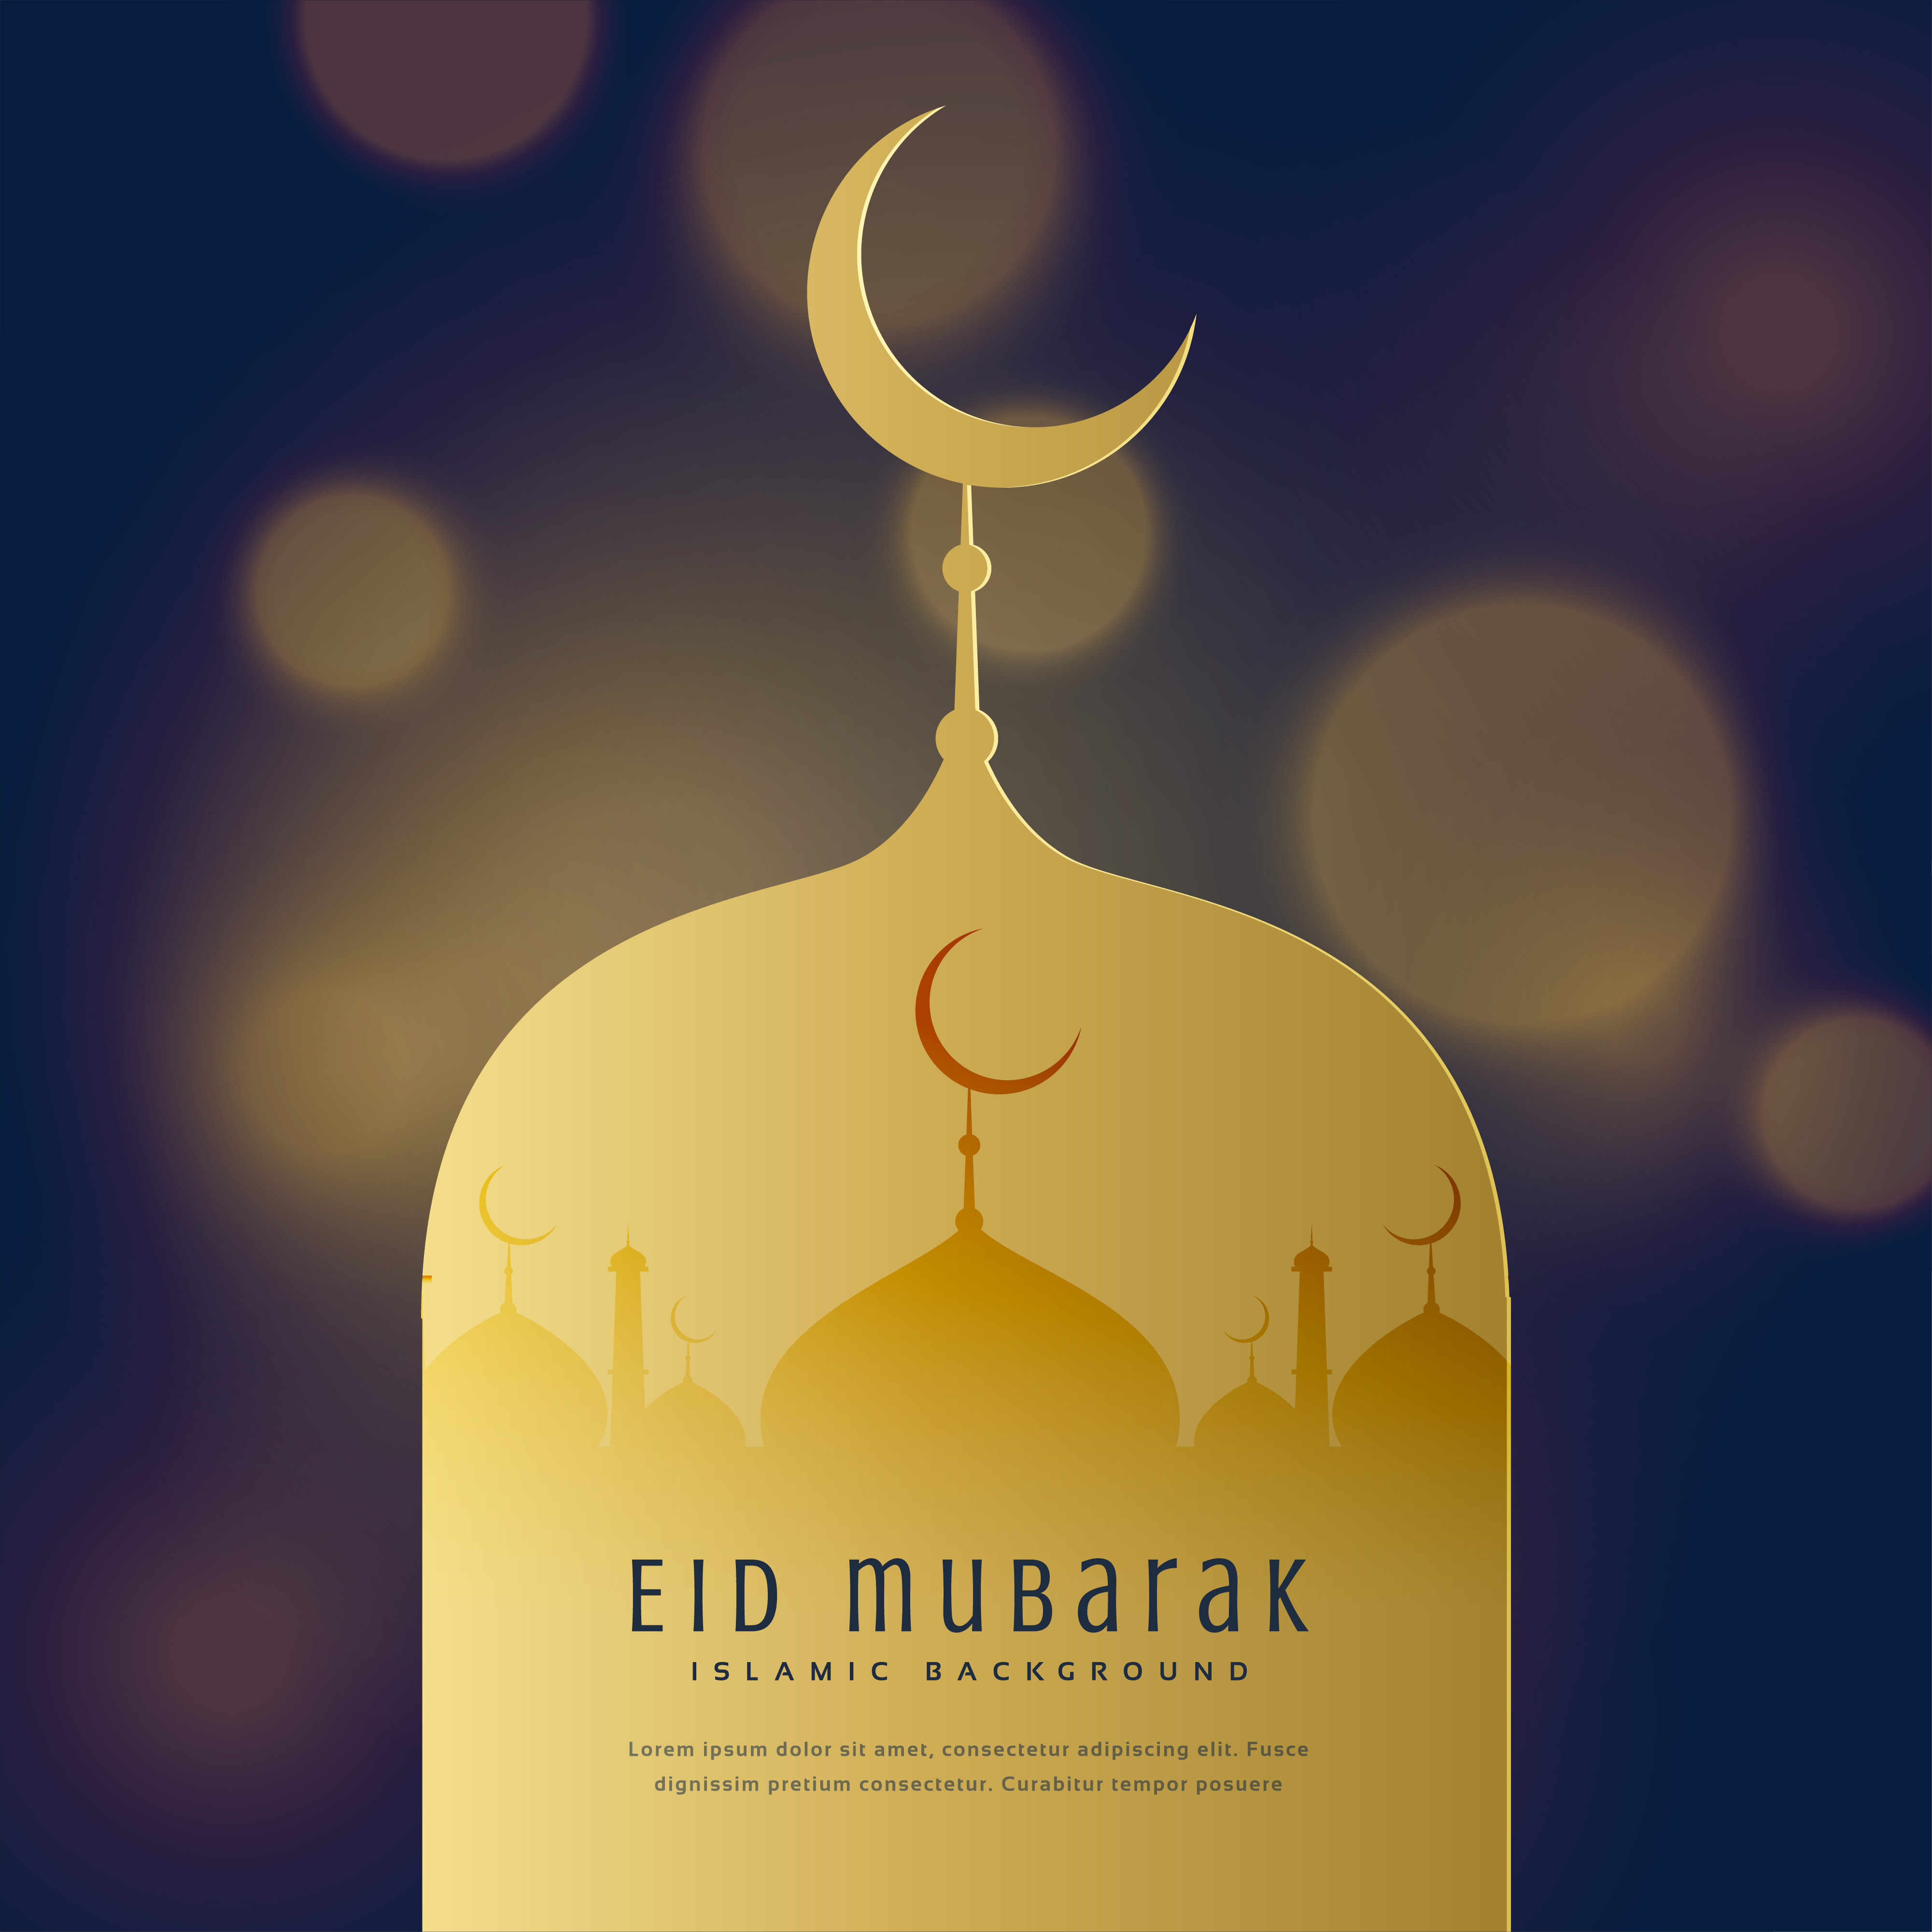 Eid mubarak greeting card design background - Download 